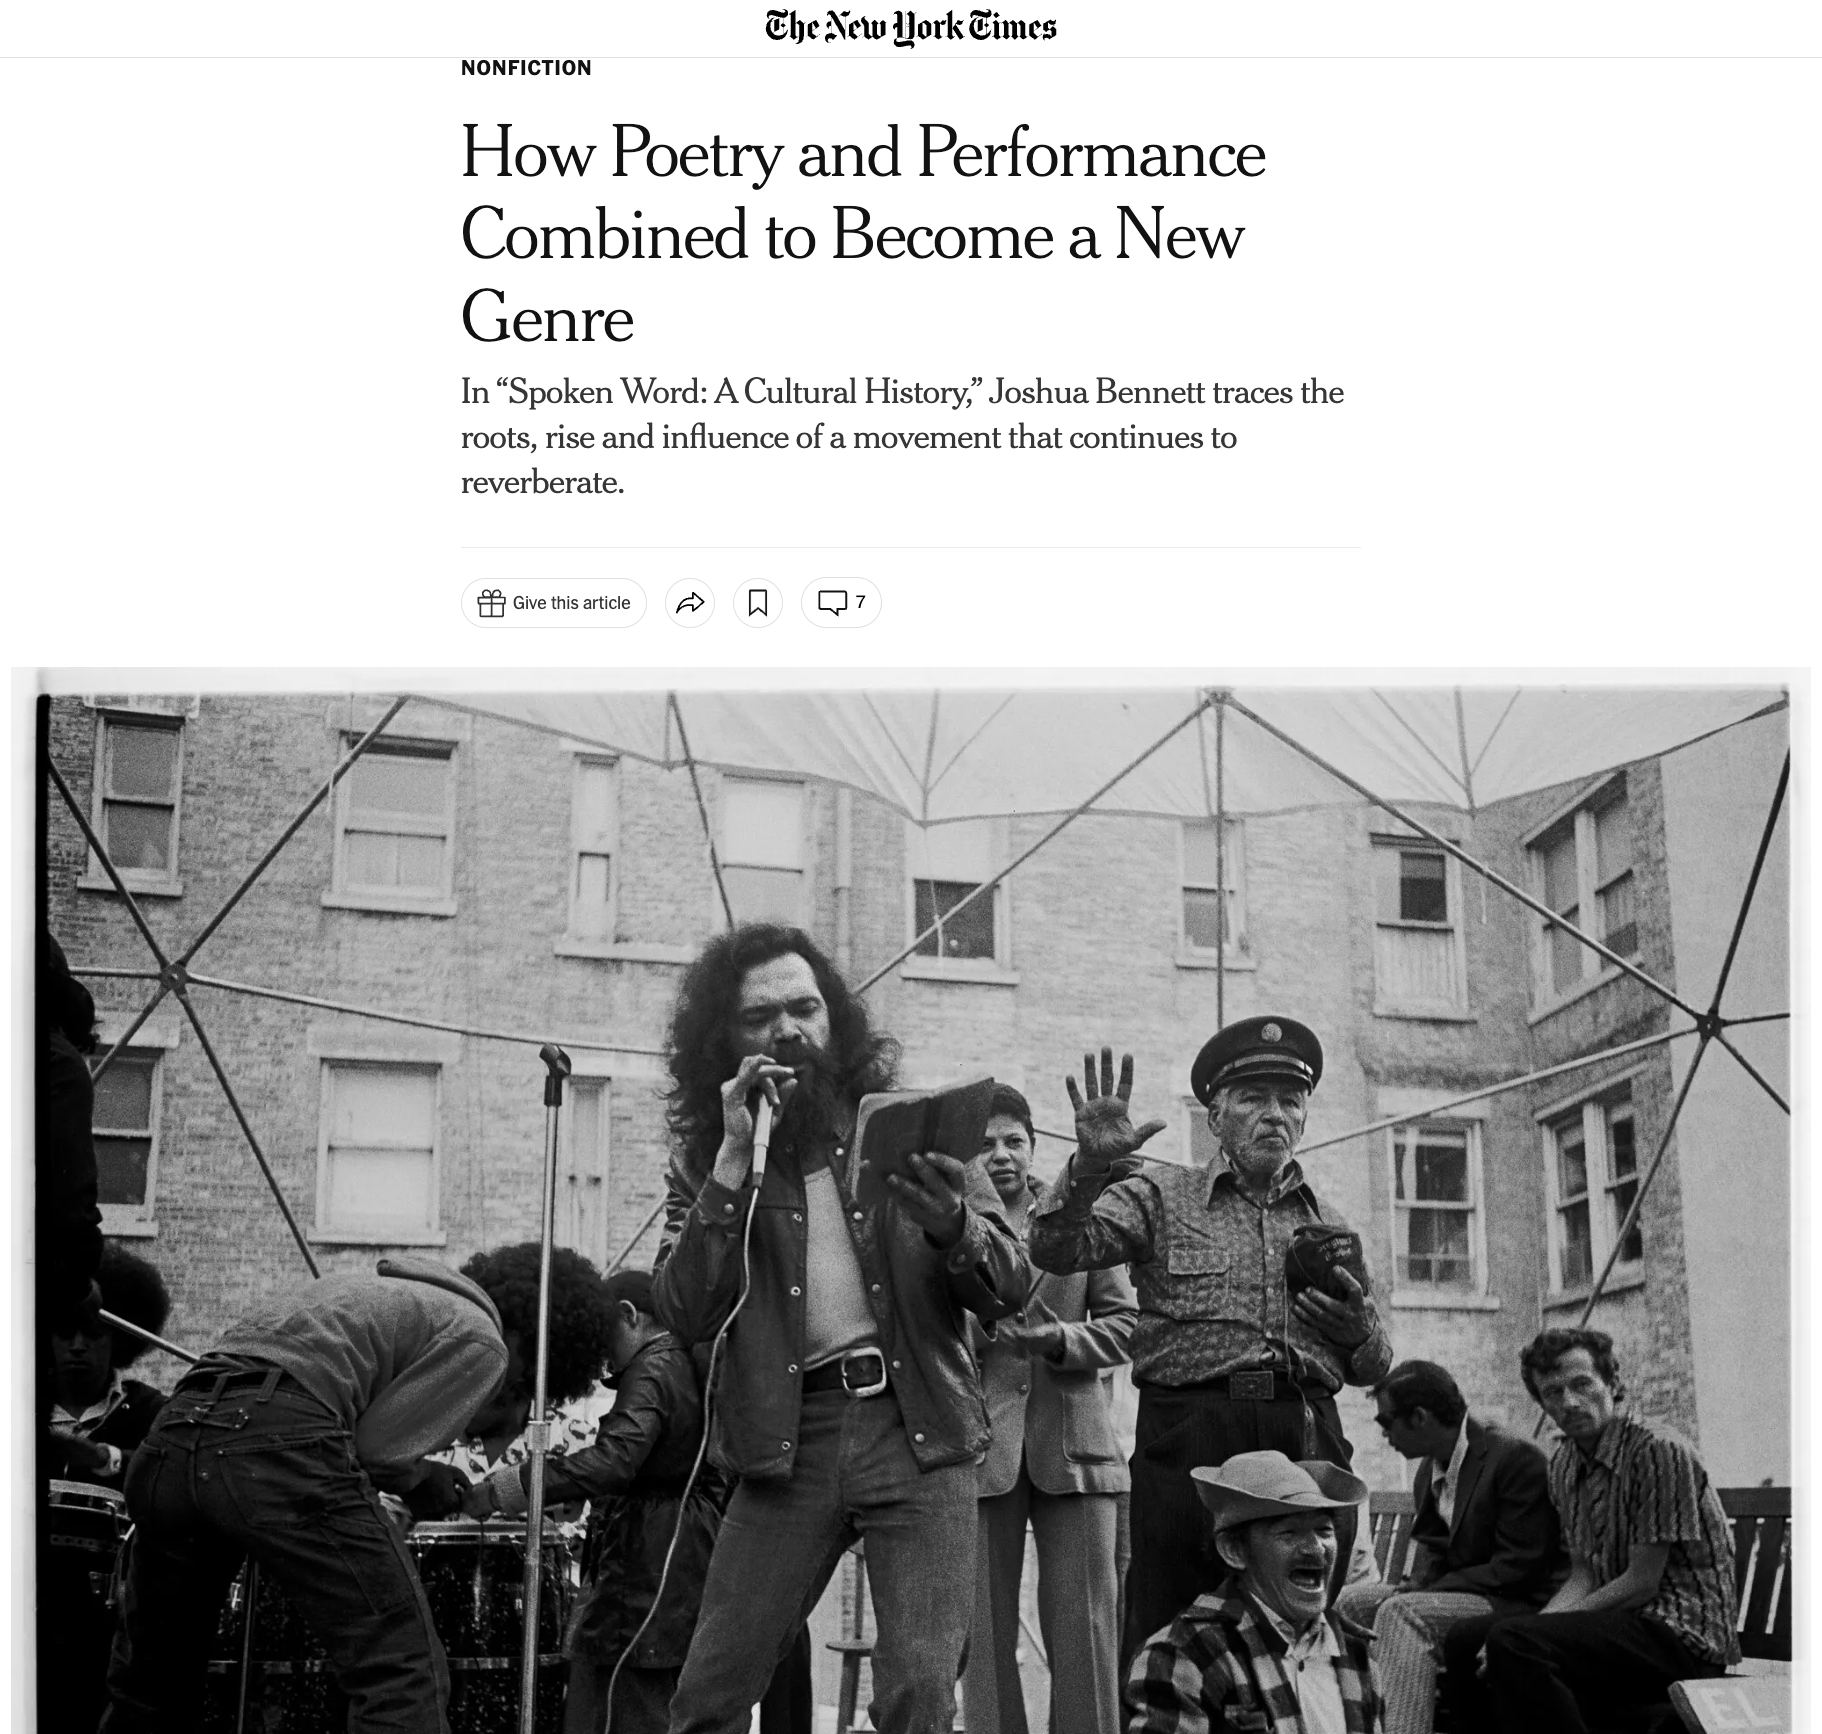 New York Times Book Review: Prof Joshua Bennett’s “Spoken Word: A Cultural History”